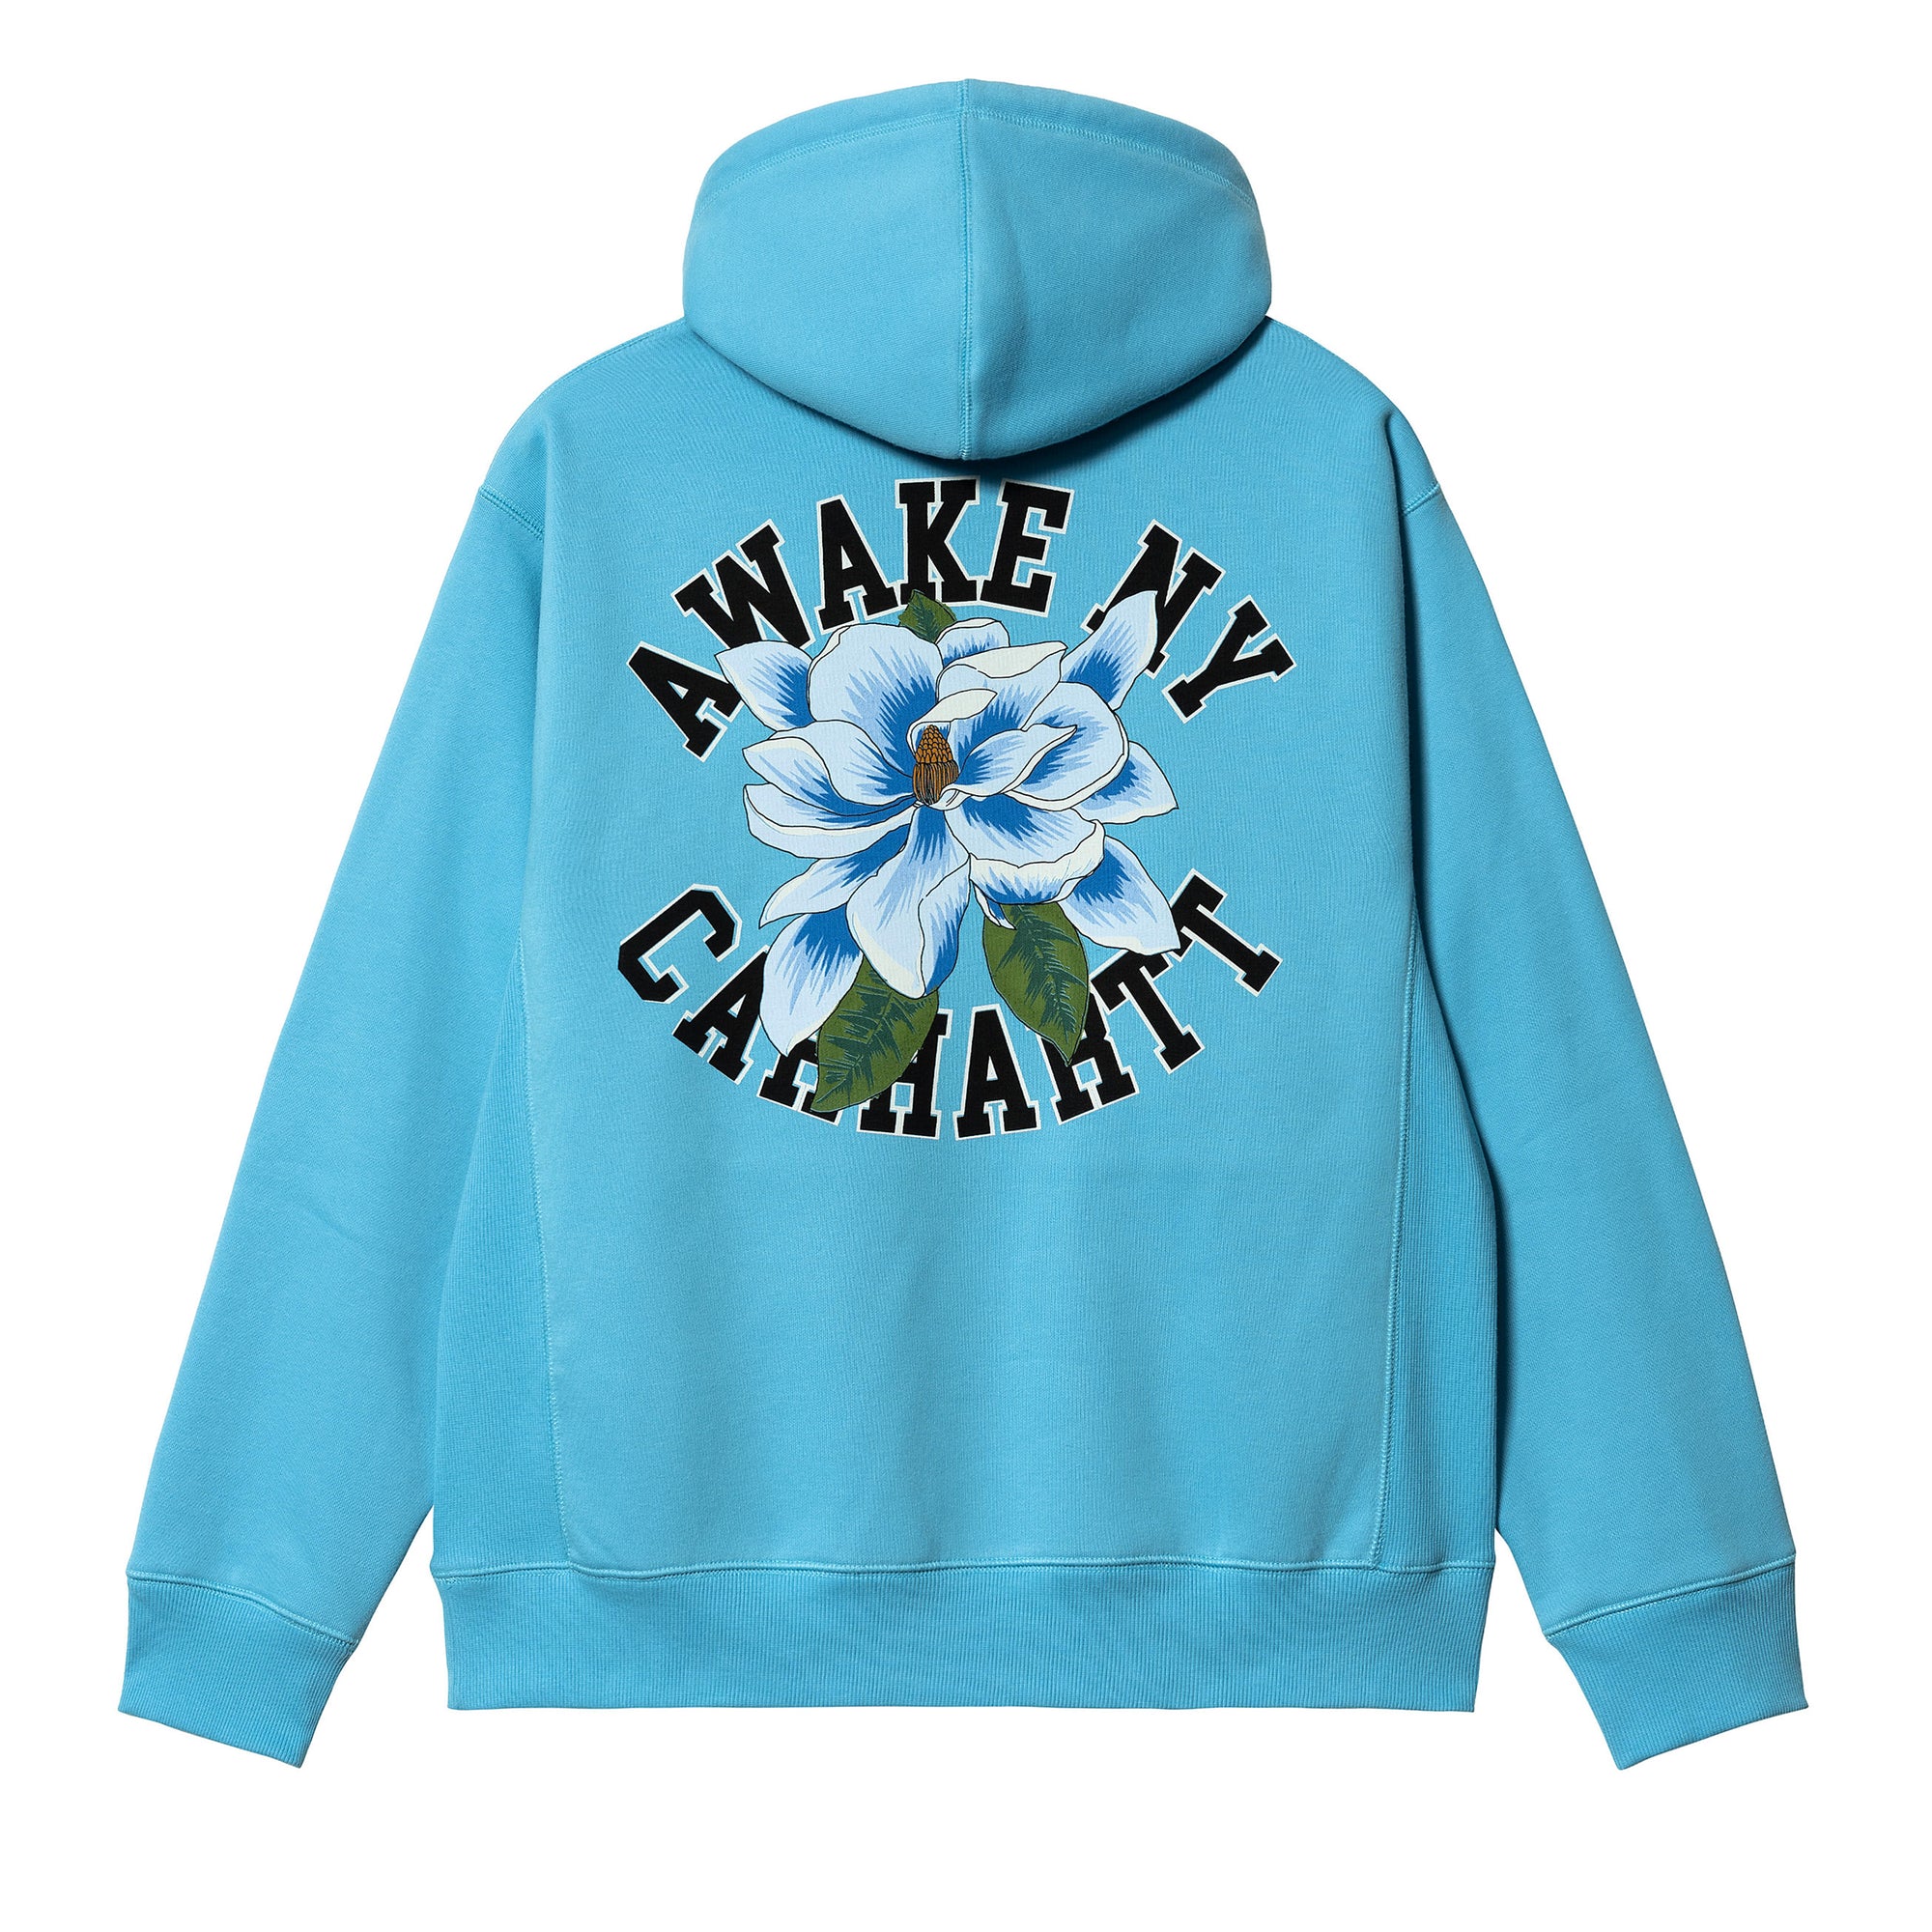 Awake NY - Carhartt WIP Printed Hoodie - (Blue)